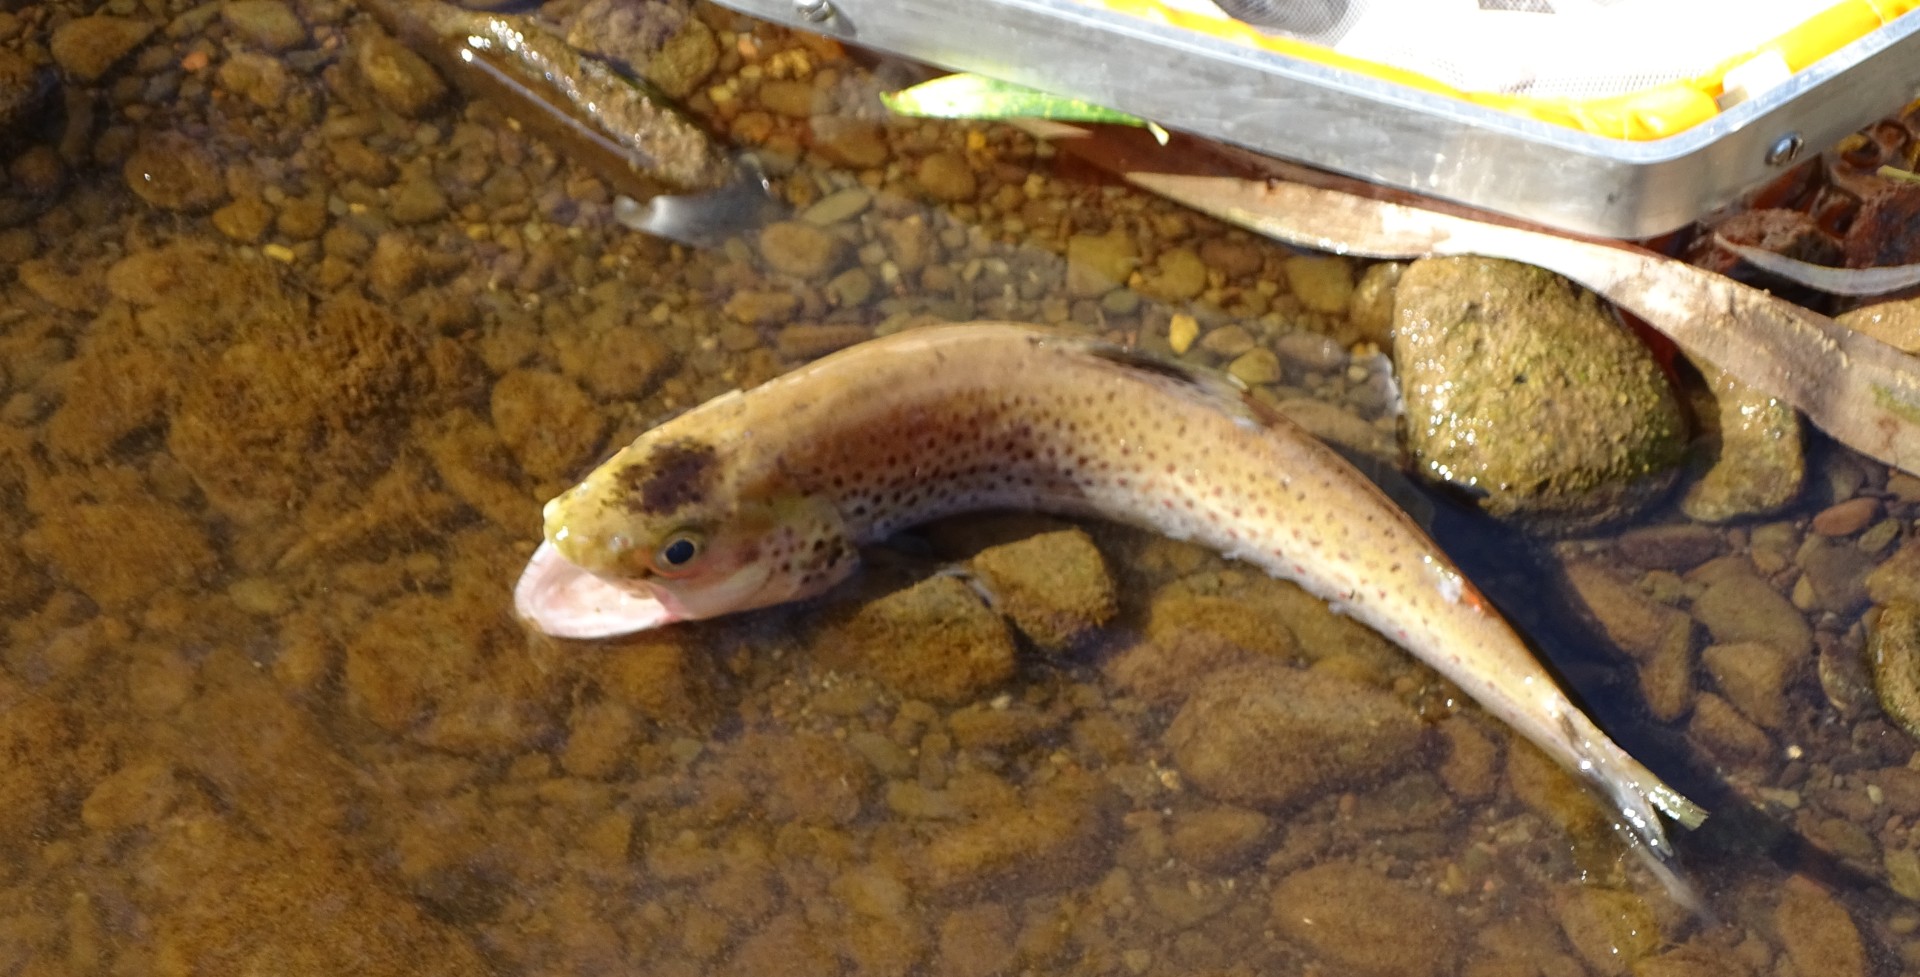 Afon Llynfi fish kill